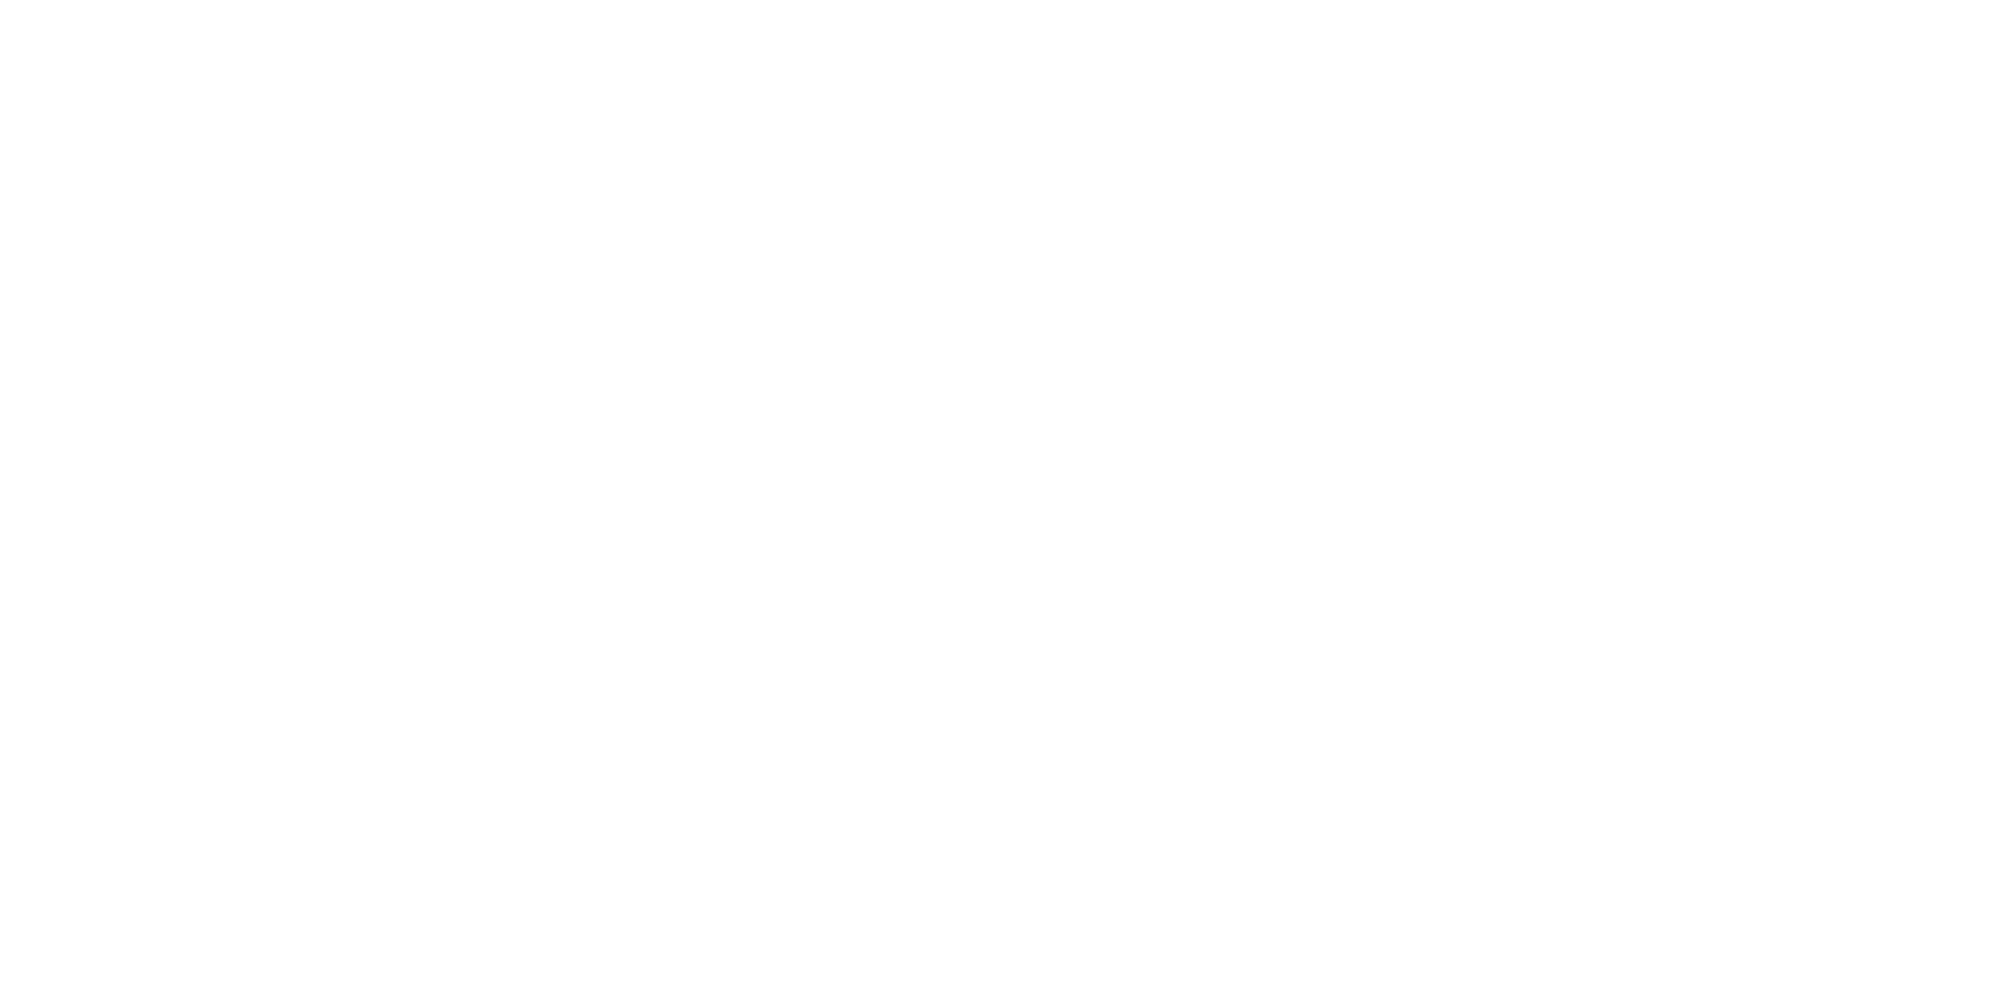 Schilling Cider Logo